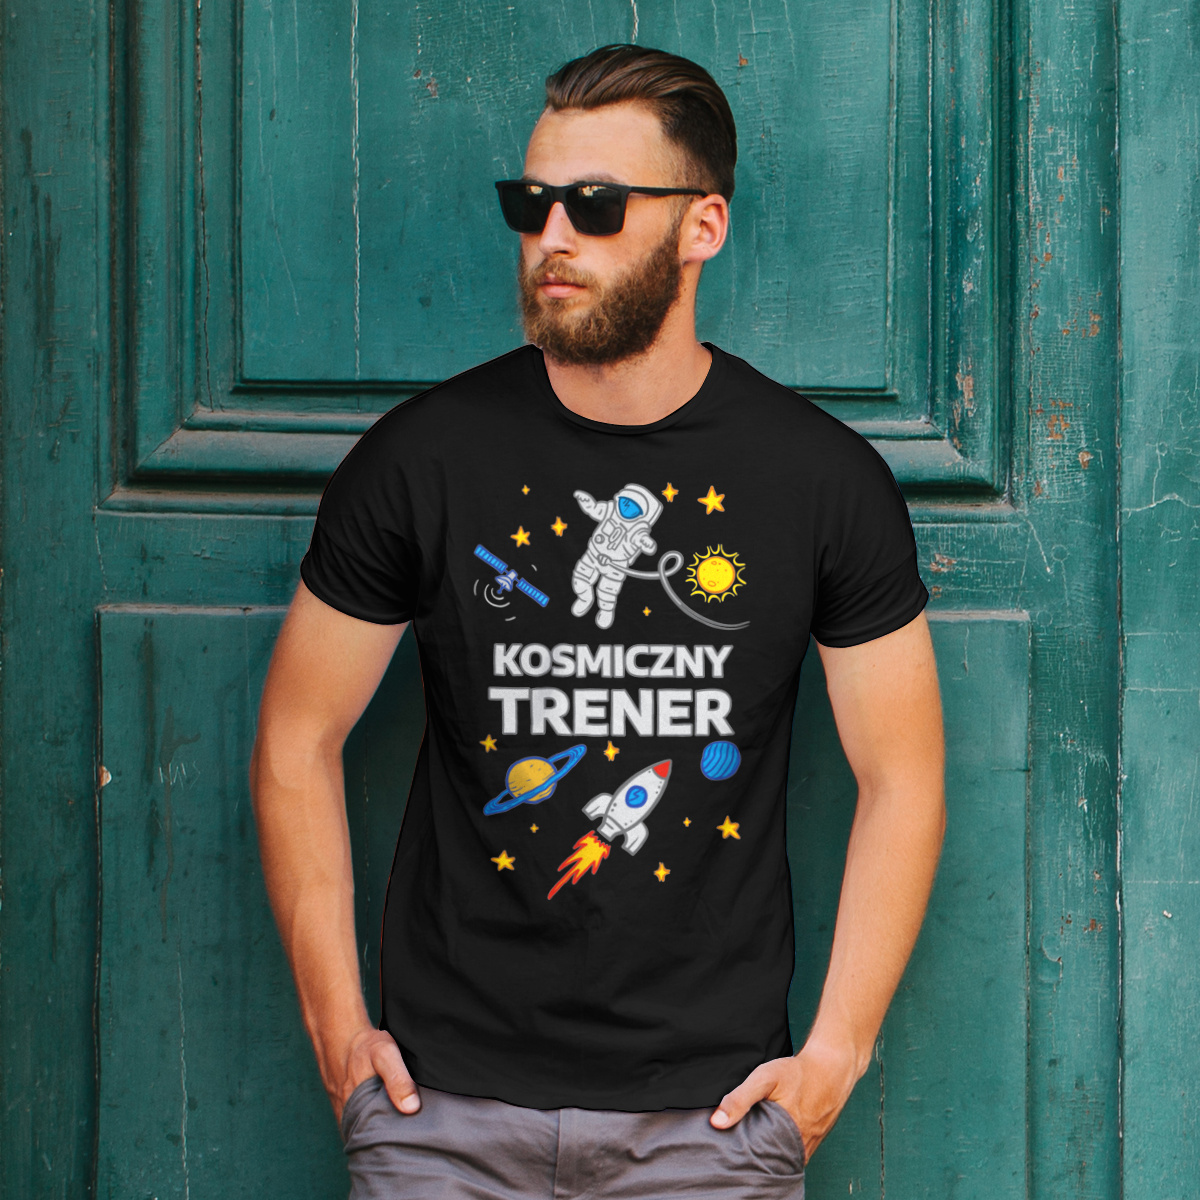 Kosmiczny Trener - Męska Koszulka Czarna